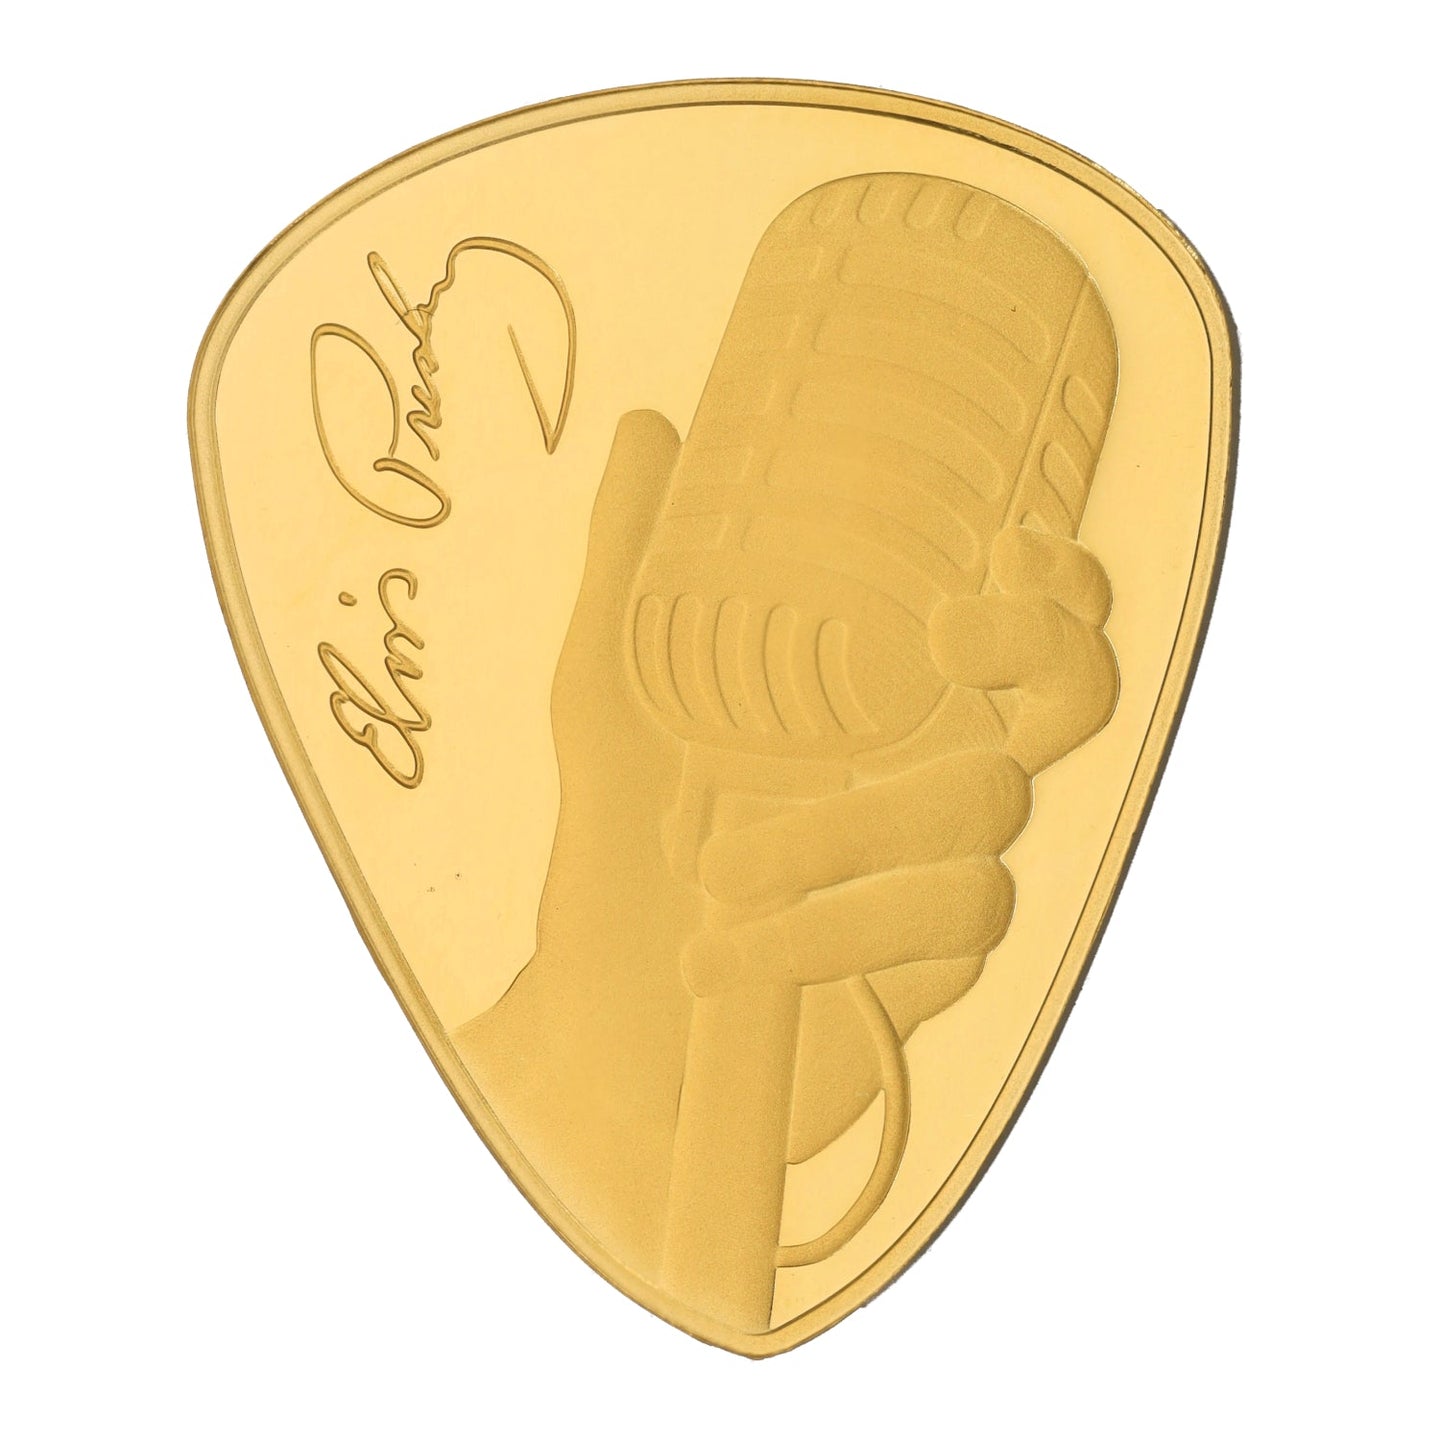 24ct Gold Elizabeth II One Pound Elvis Presley Plectrum 2021 Coin